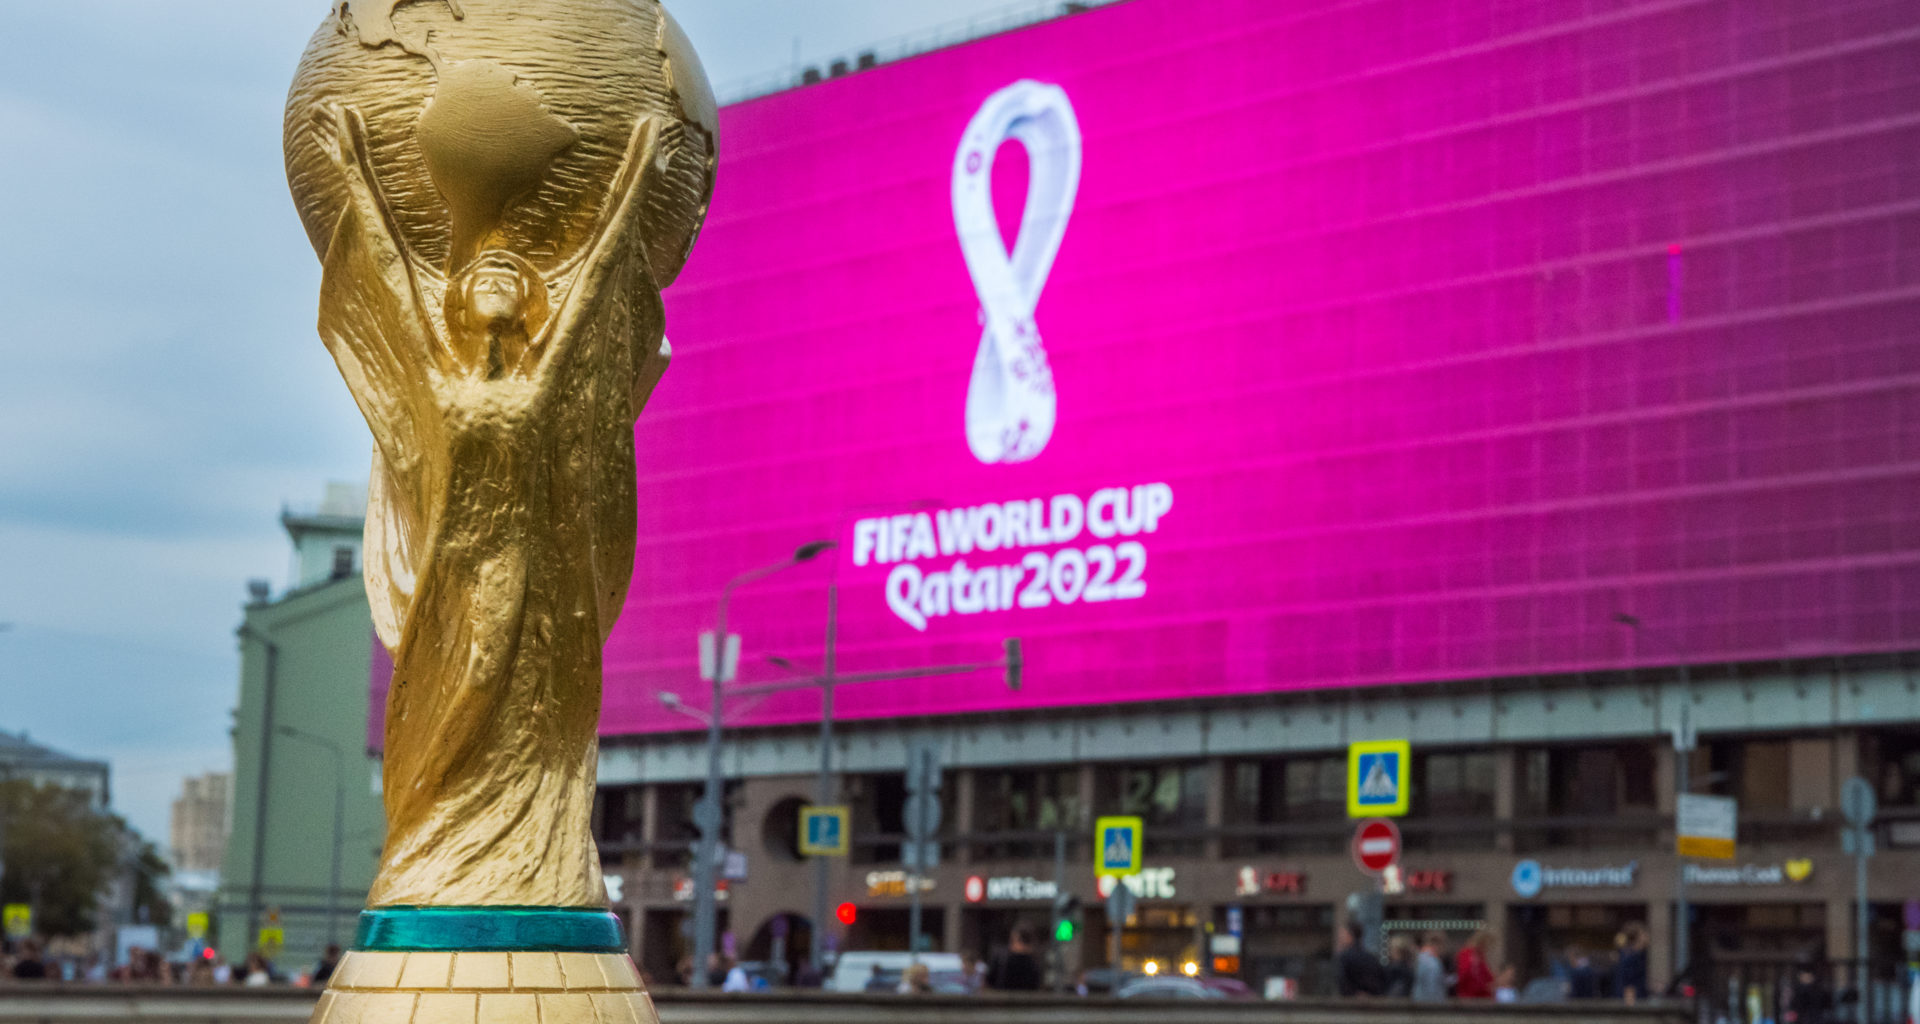 The Qatar World Cup 2022